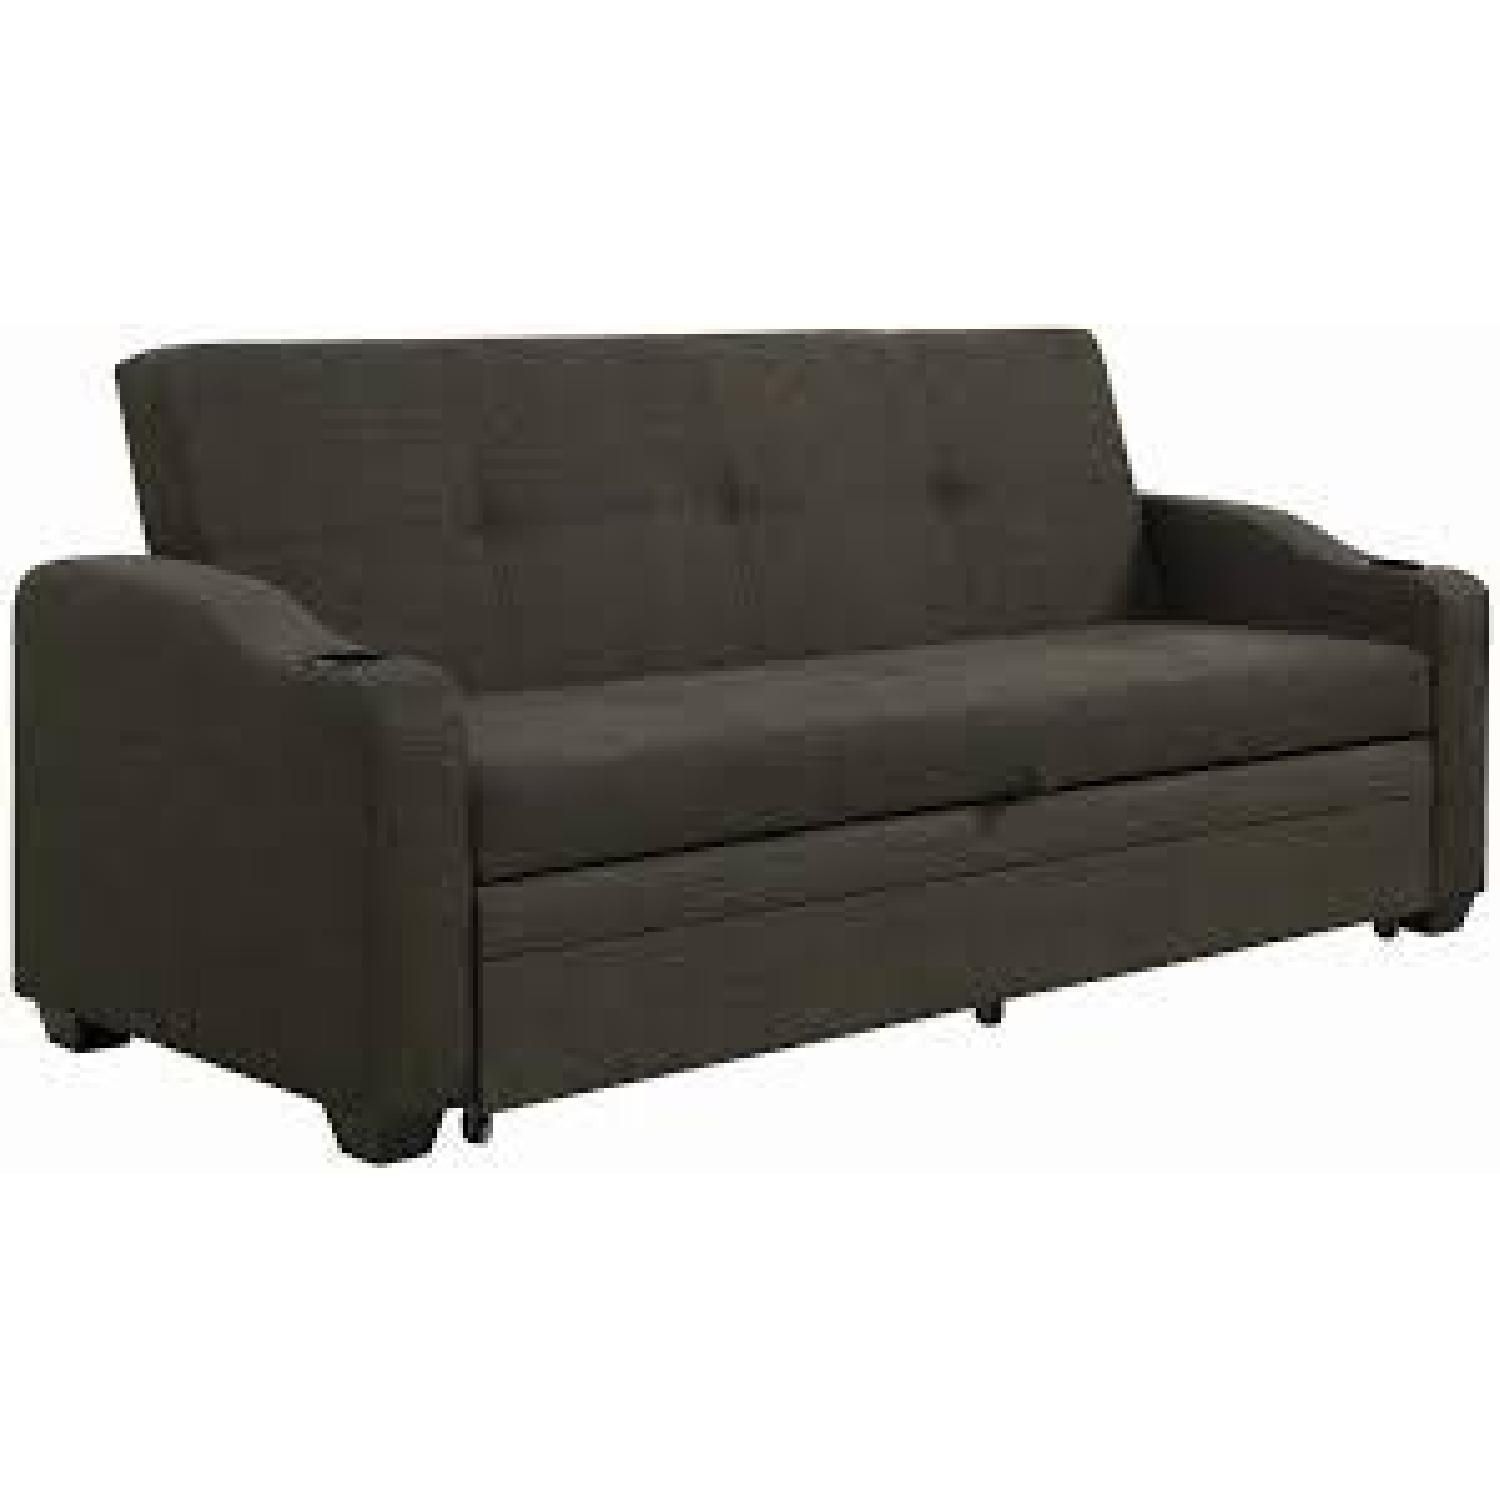 Charcoal Grey Pull Out Sleeper Sofa – Aptdeco Pertaining To 3 In 1 Gray Pull Out Sleeper Sofas (View 15 of 20)